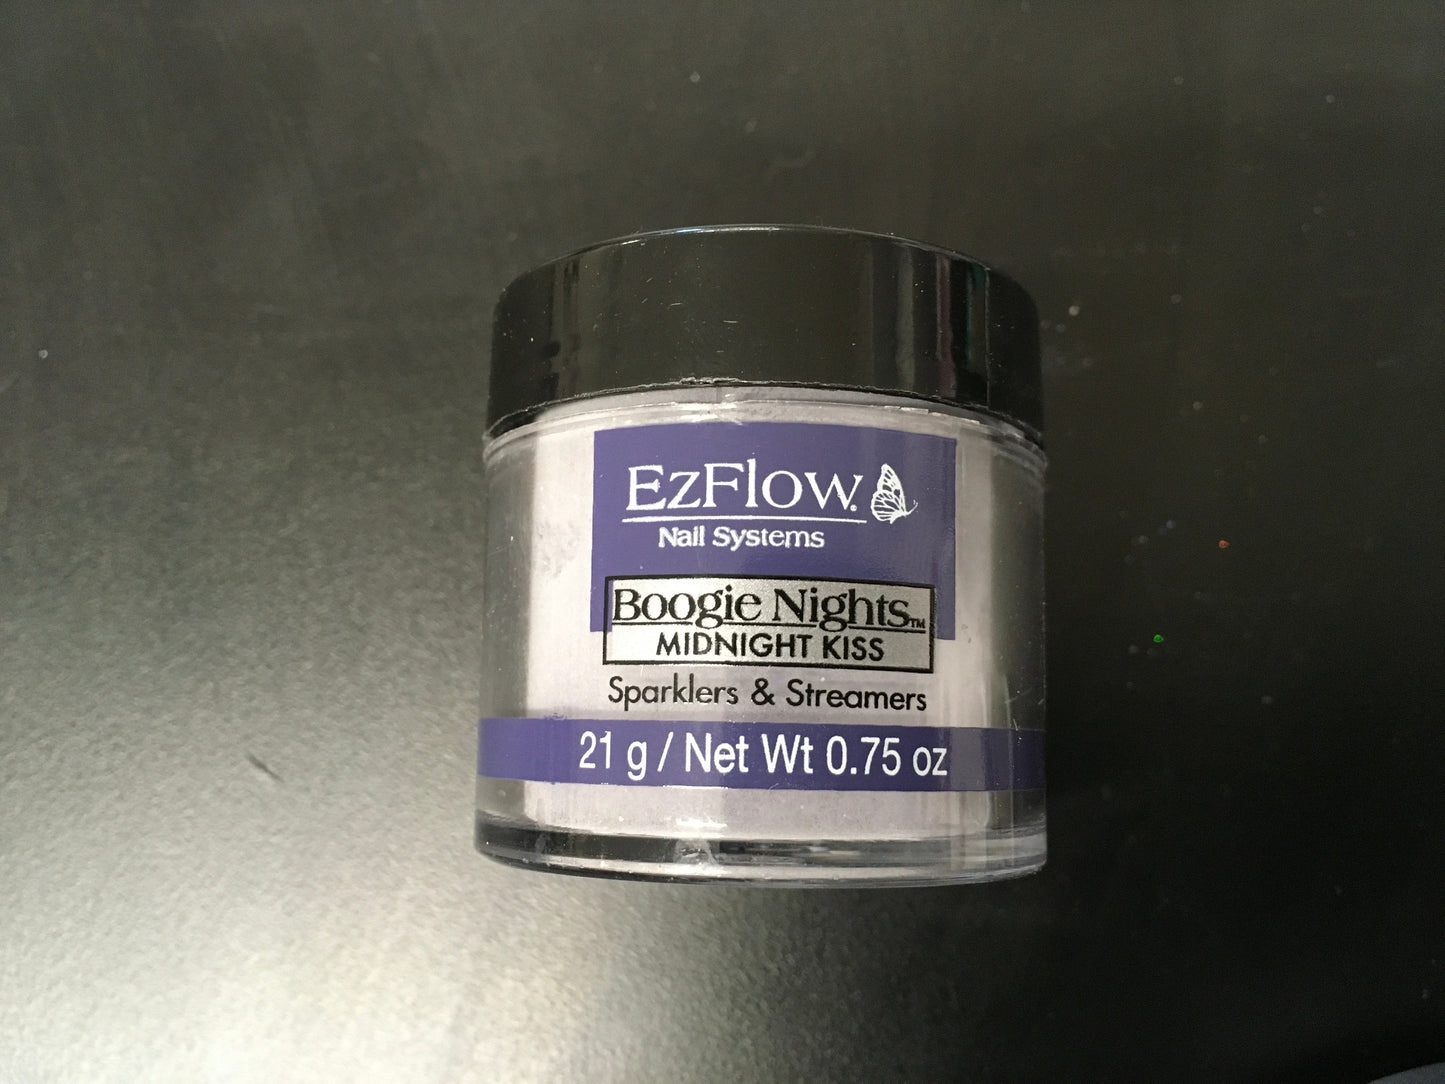 EzFlow Boogie Nights Acrylic Powder 0.75 oz Midnight Kiss Collection